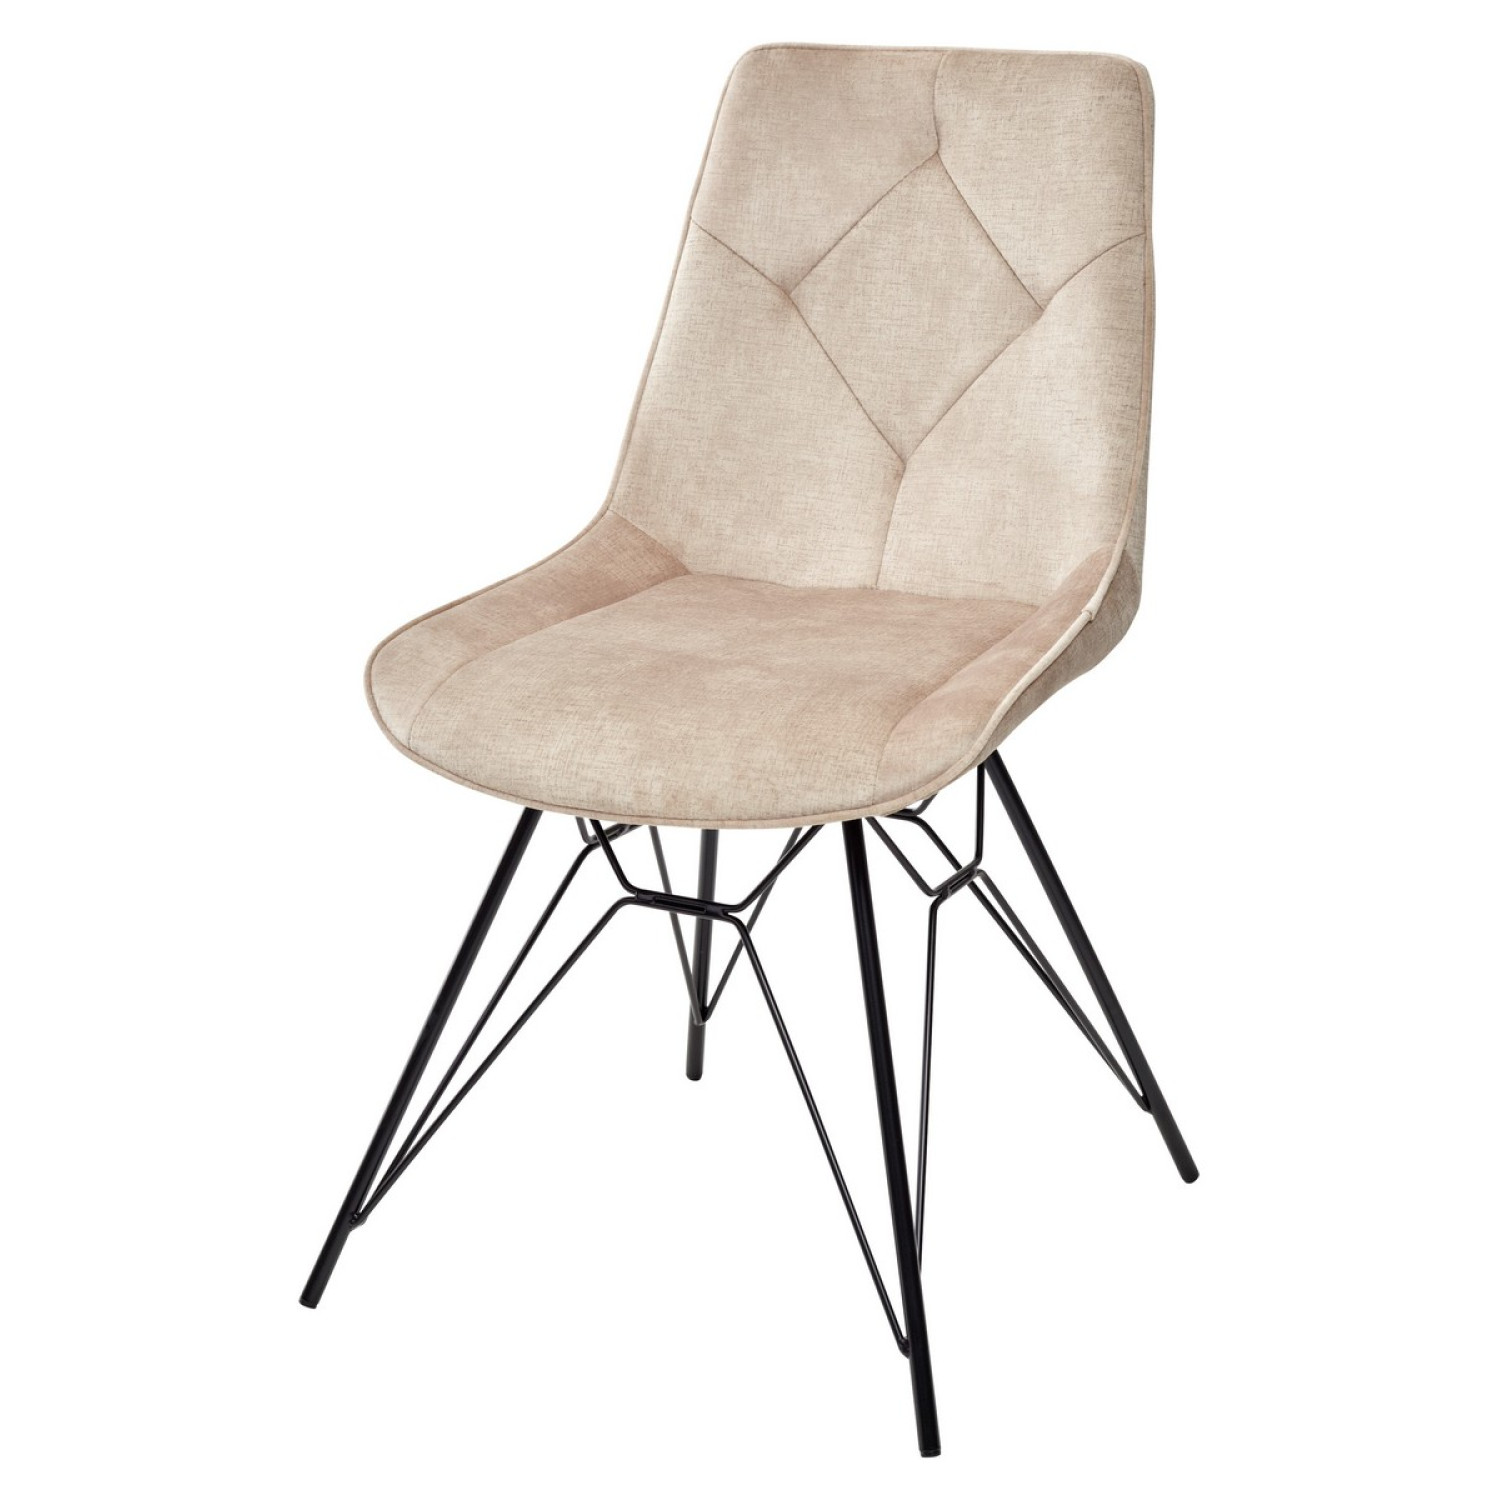 Металлические стулья Стул MARBELLA PK6015-10 (VBP210) античный бежевый, велюр М-City фото 1 — New Style of Furniture